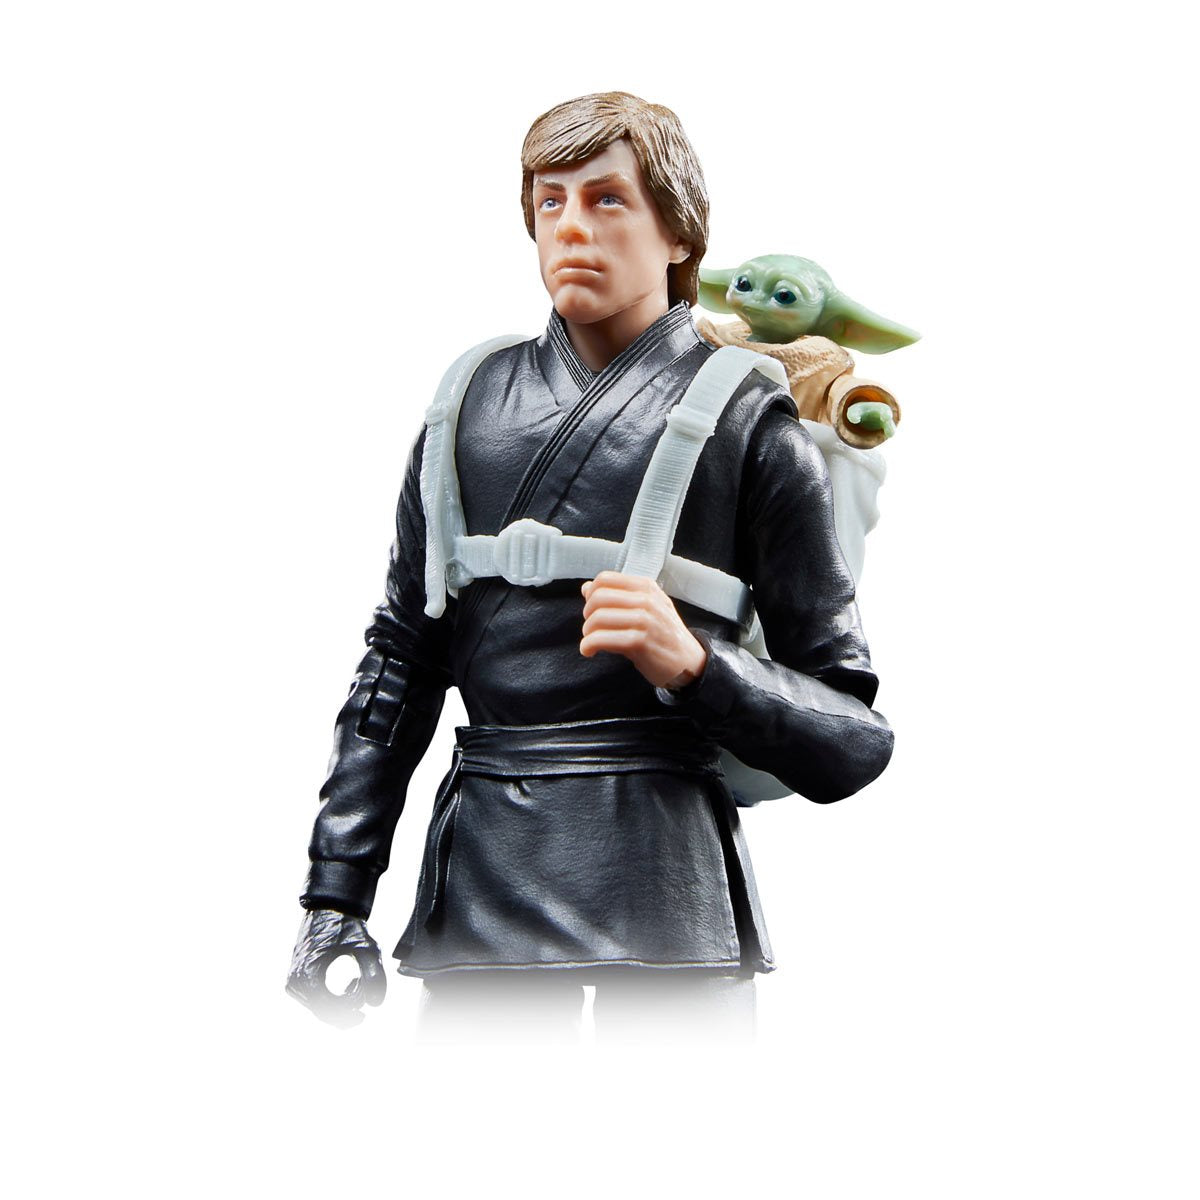 Star Wars The Black Series Luke Skywalker & Grogu 6-Inch Action Figures - Heretoserveyou